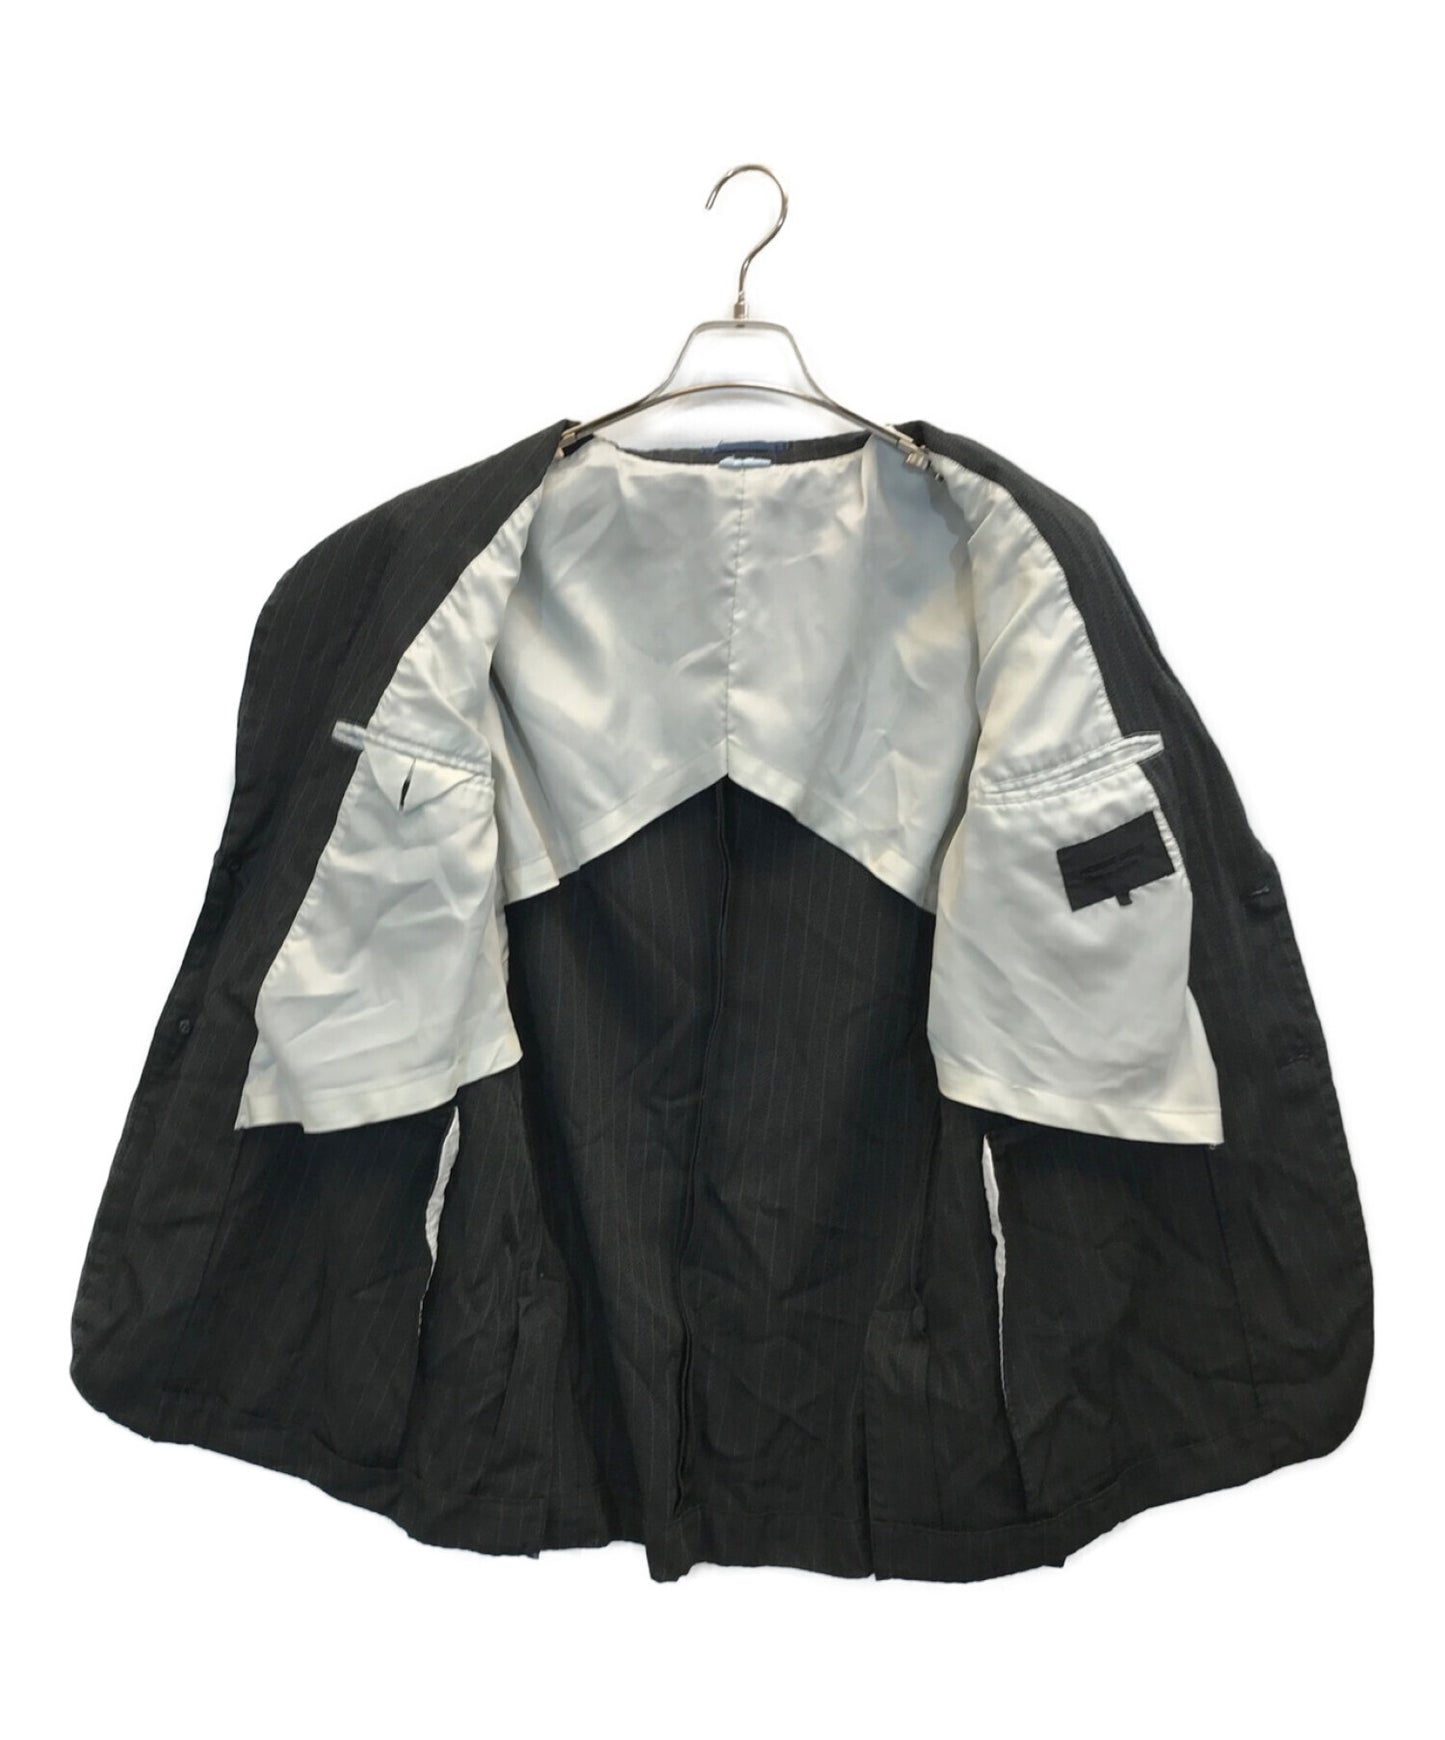 COMME des GARCONS HOMME DEUX Shrunken Poly Ring Lapel Striped Jacket 3B Tailored Jacket DK-J038